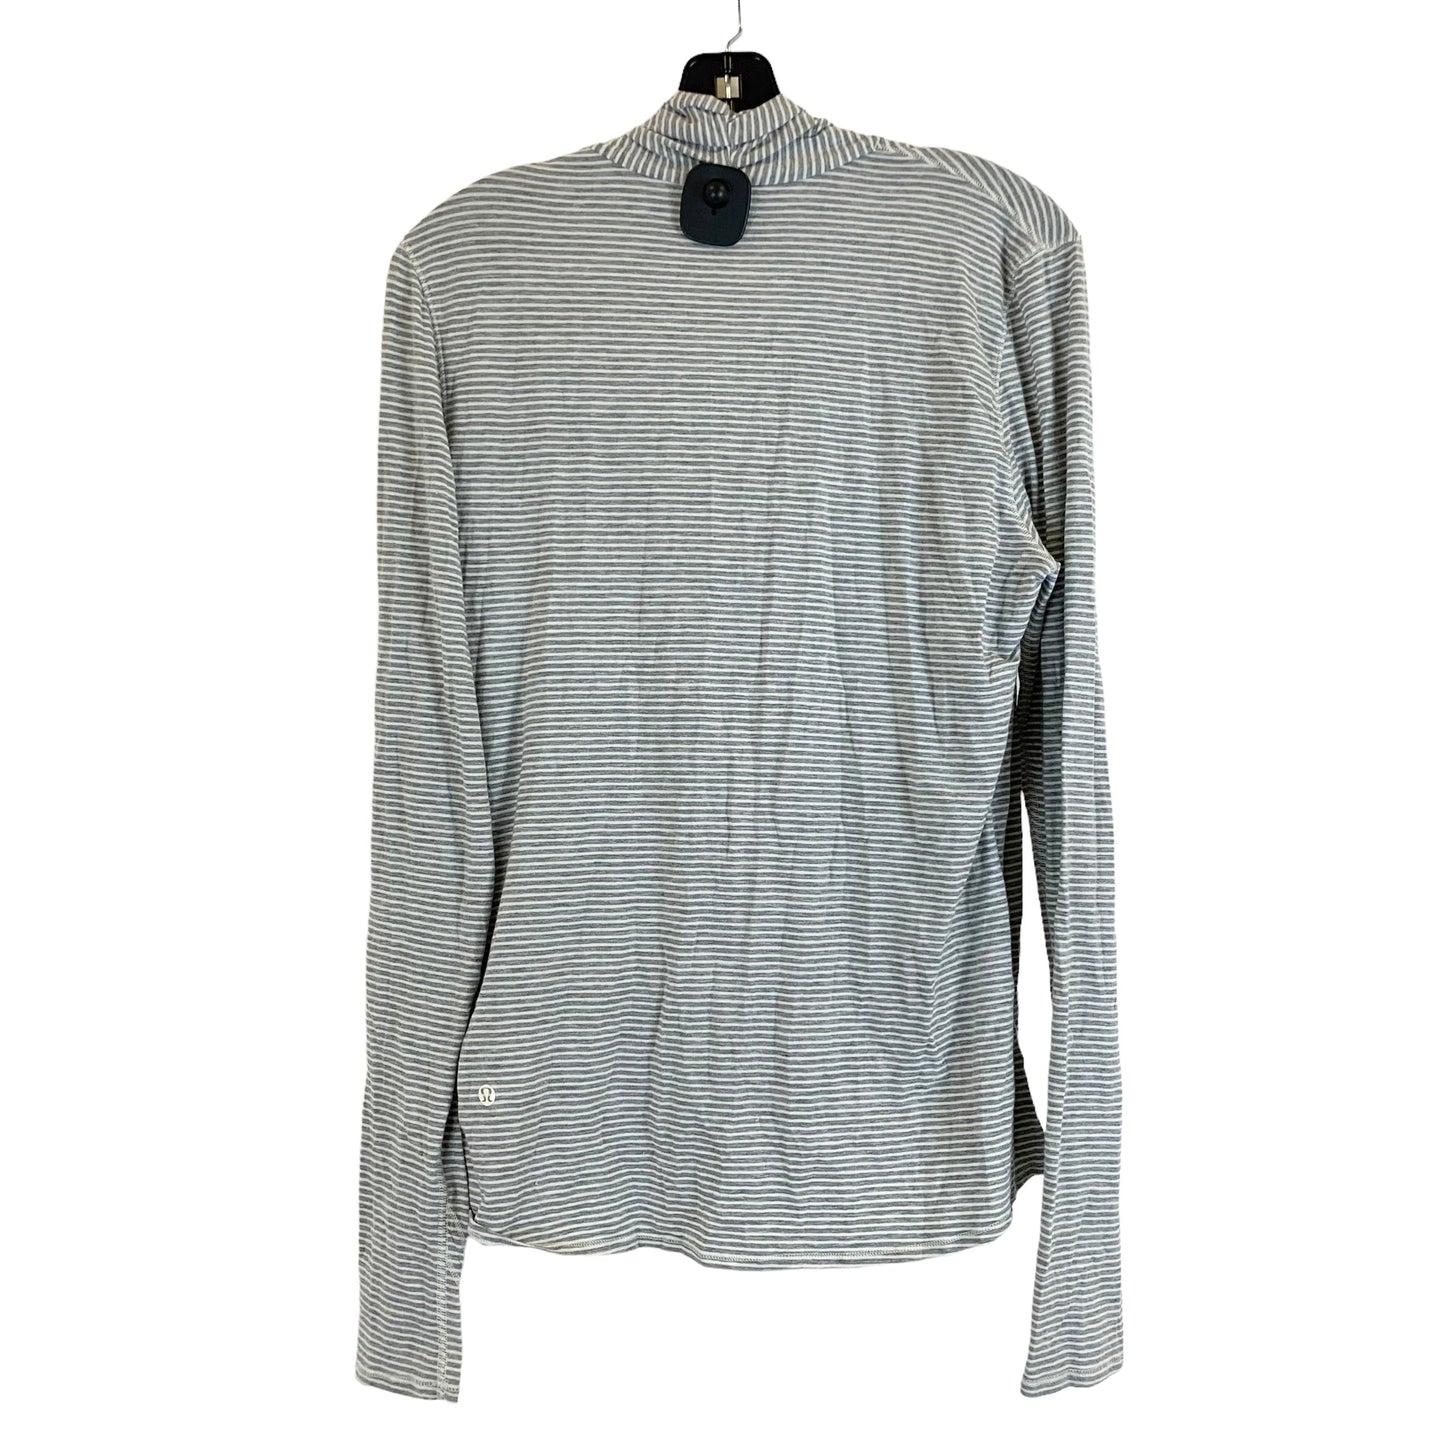 Grey & White Athletic Top Long Sleeve Collar Lululemon, Size 12